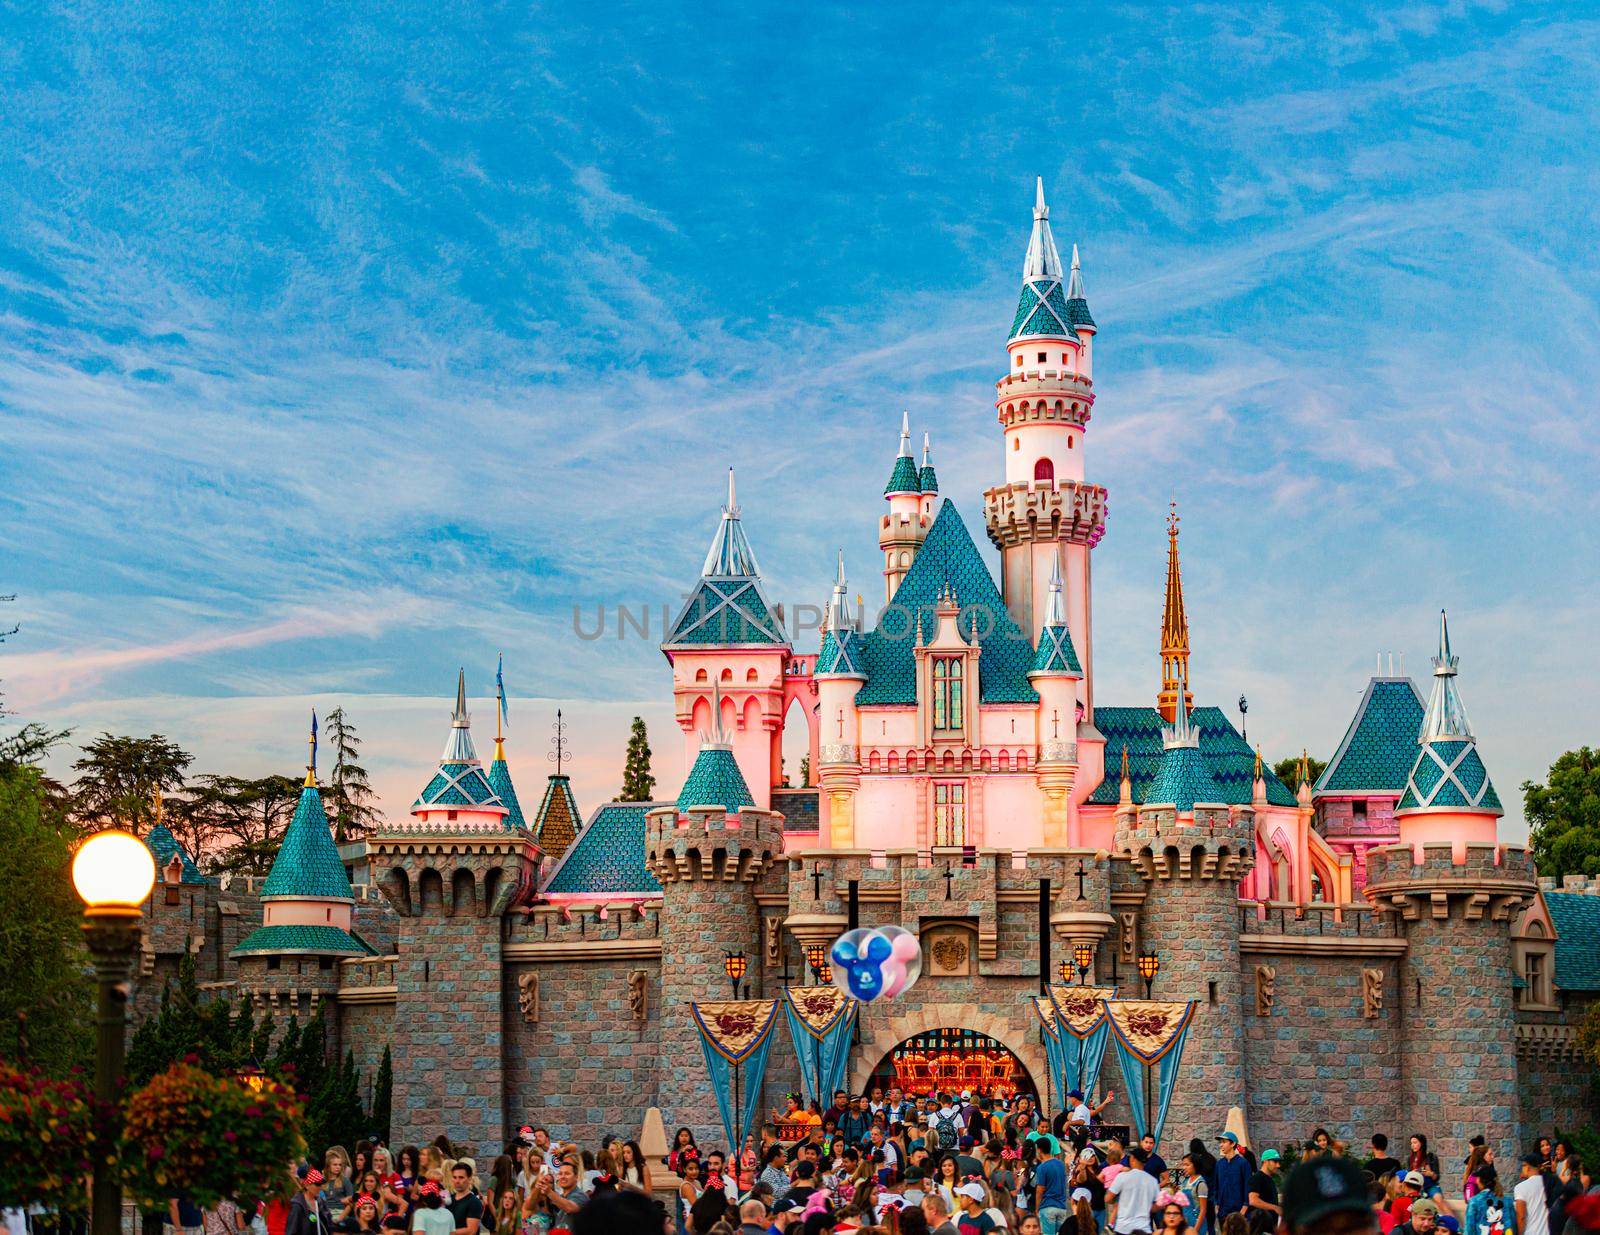 Anaheim, United States of America - October 23, 2016: Legendary Disney castle of sleeping beauty in Disneyland